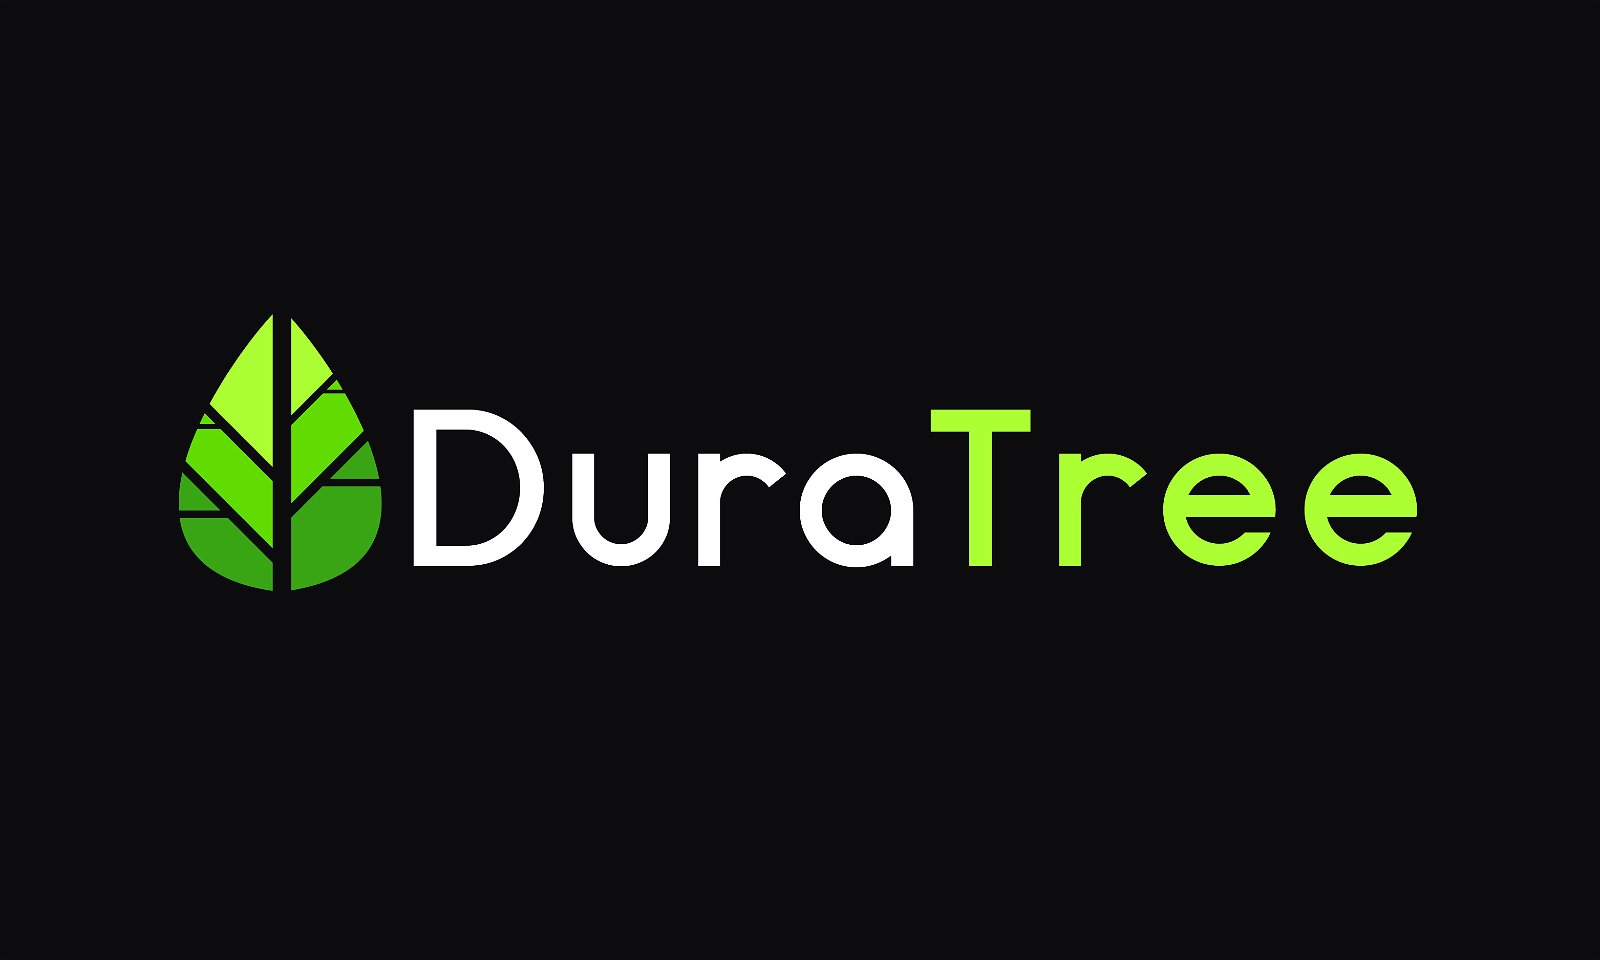 DuraTree.com - Creative brandable domain for sale